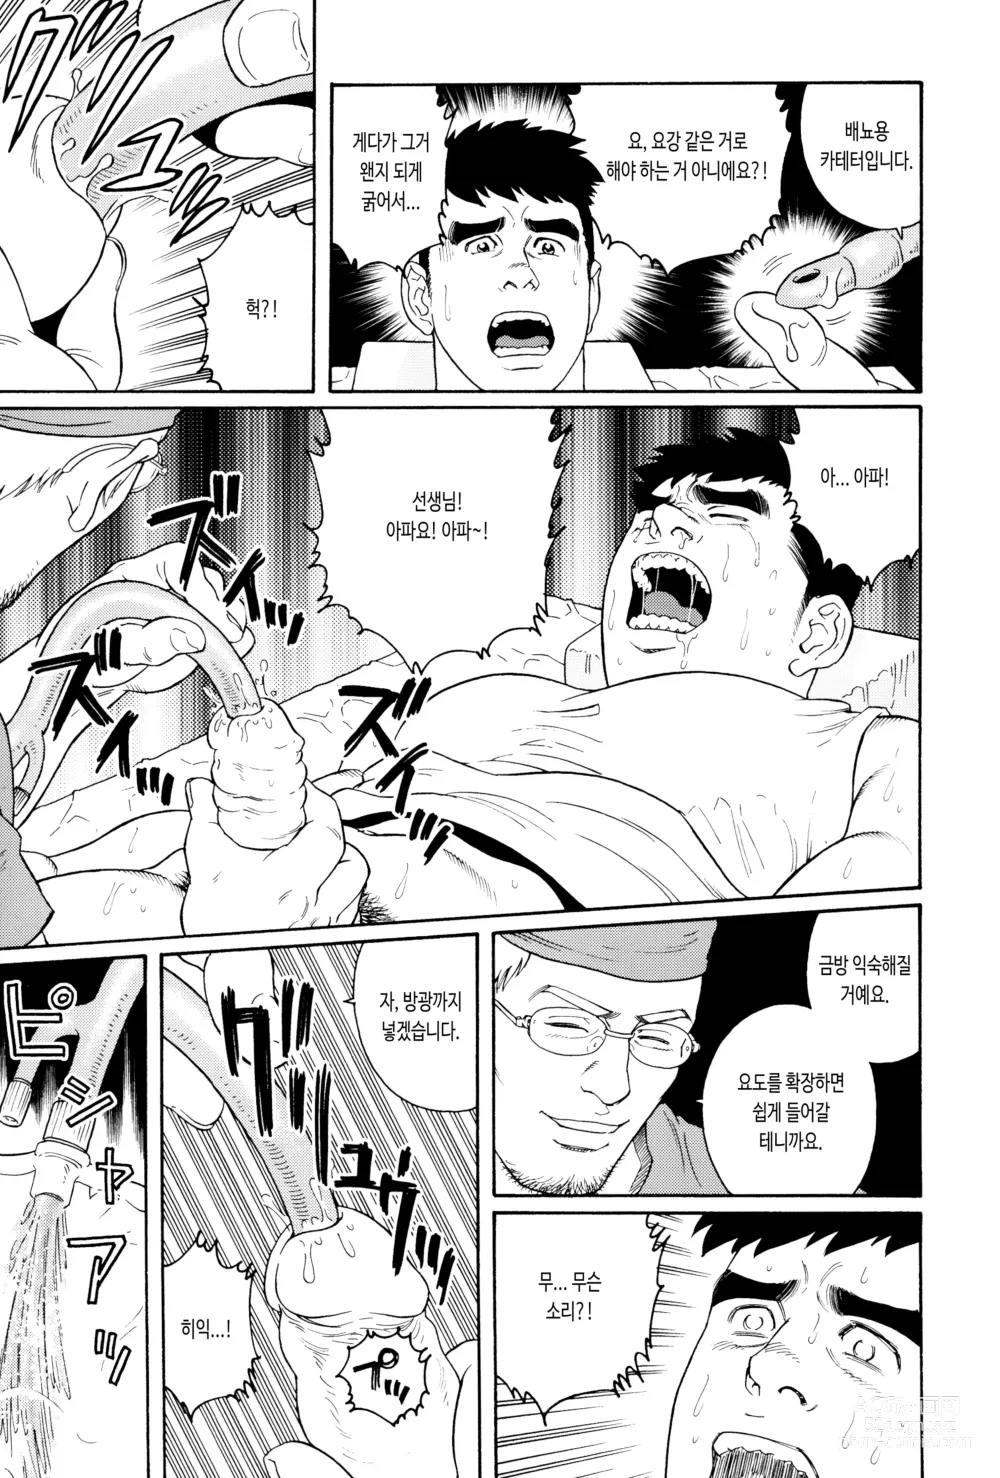 Page 7 of manga KRANKE